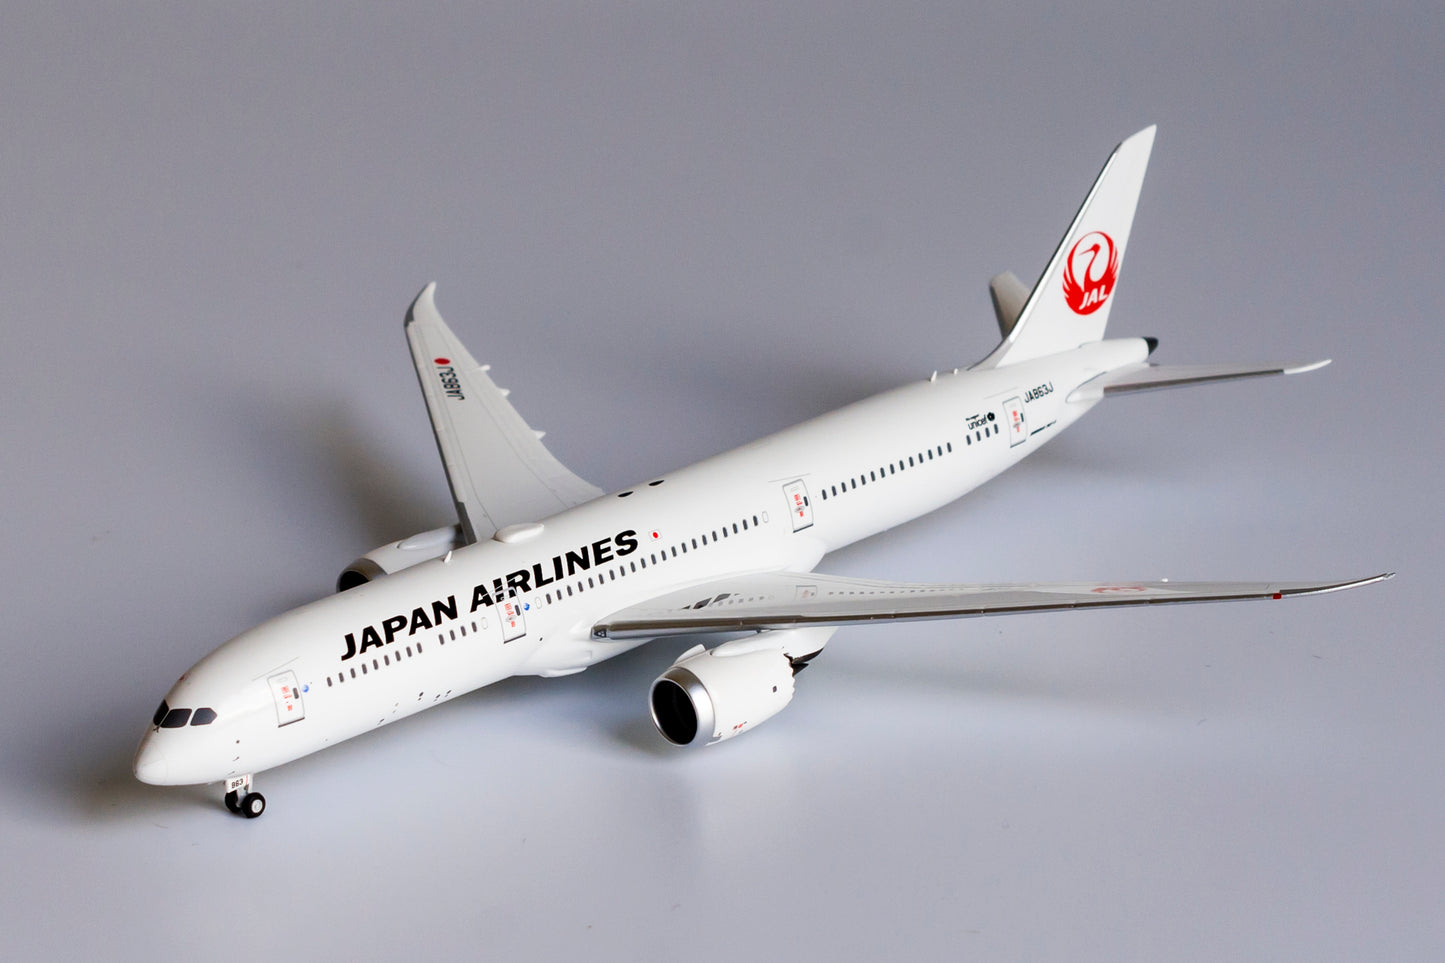 1:400 NG Models Japan Airlines (JAL) Boeing 787-9 JA863J NG55065